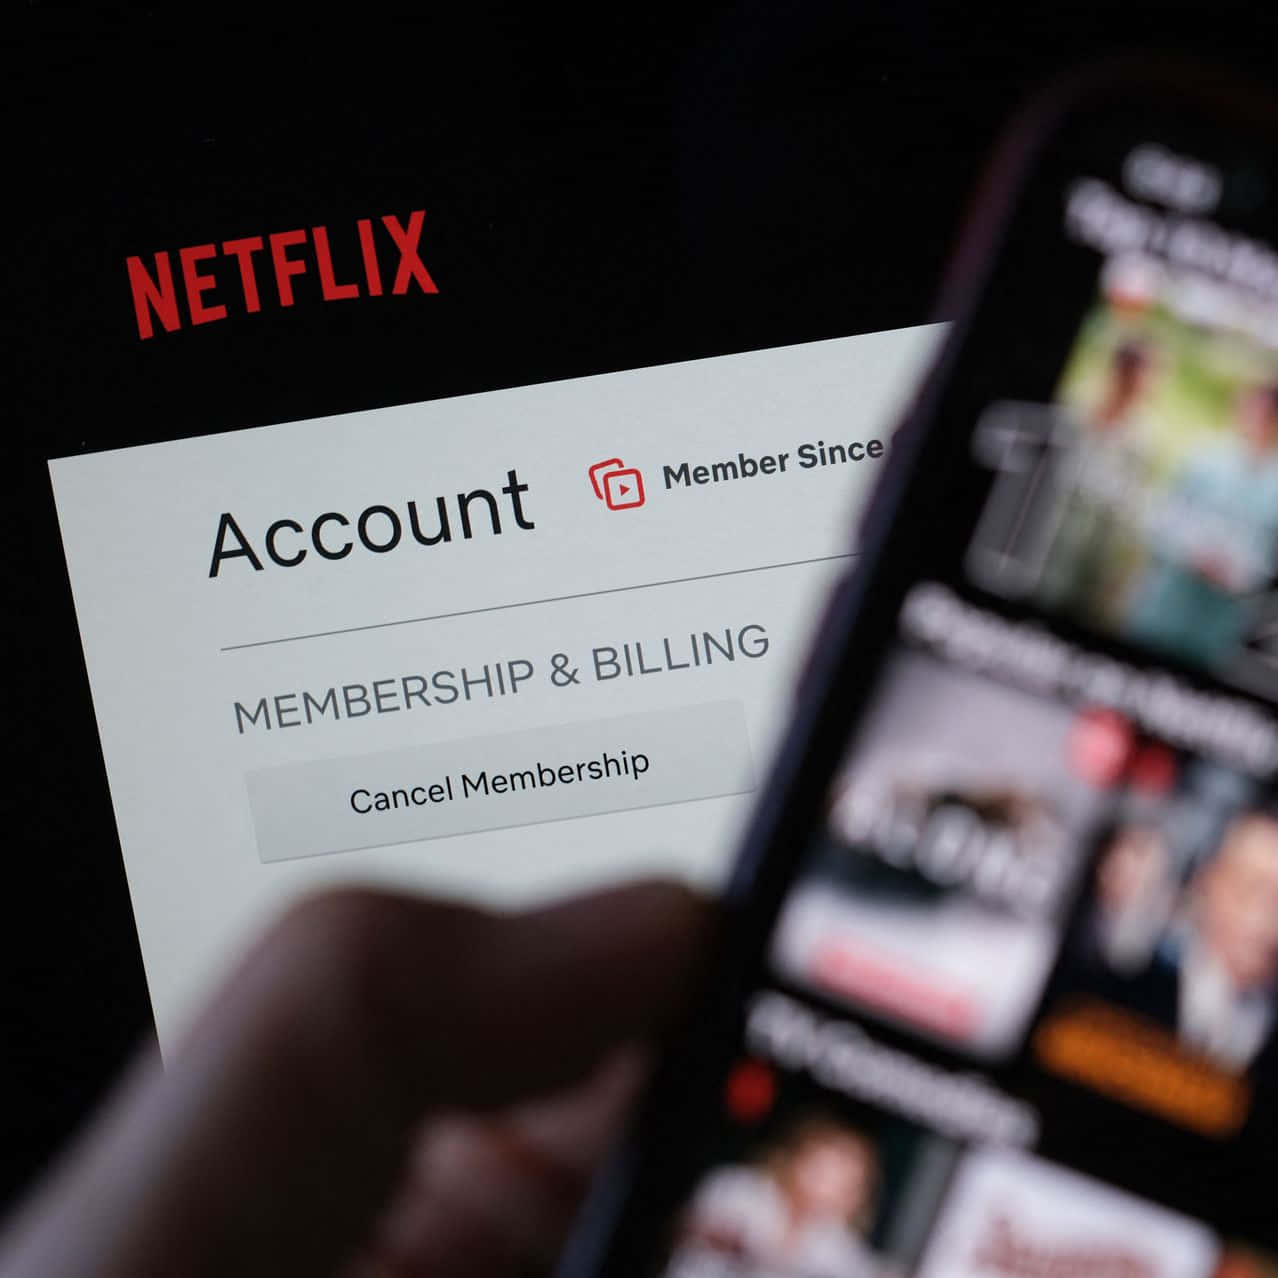 "Unlock a World of Entertainment with Netflix"